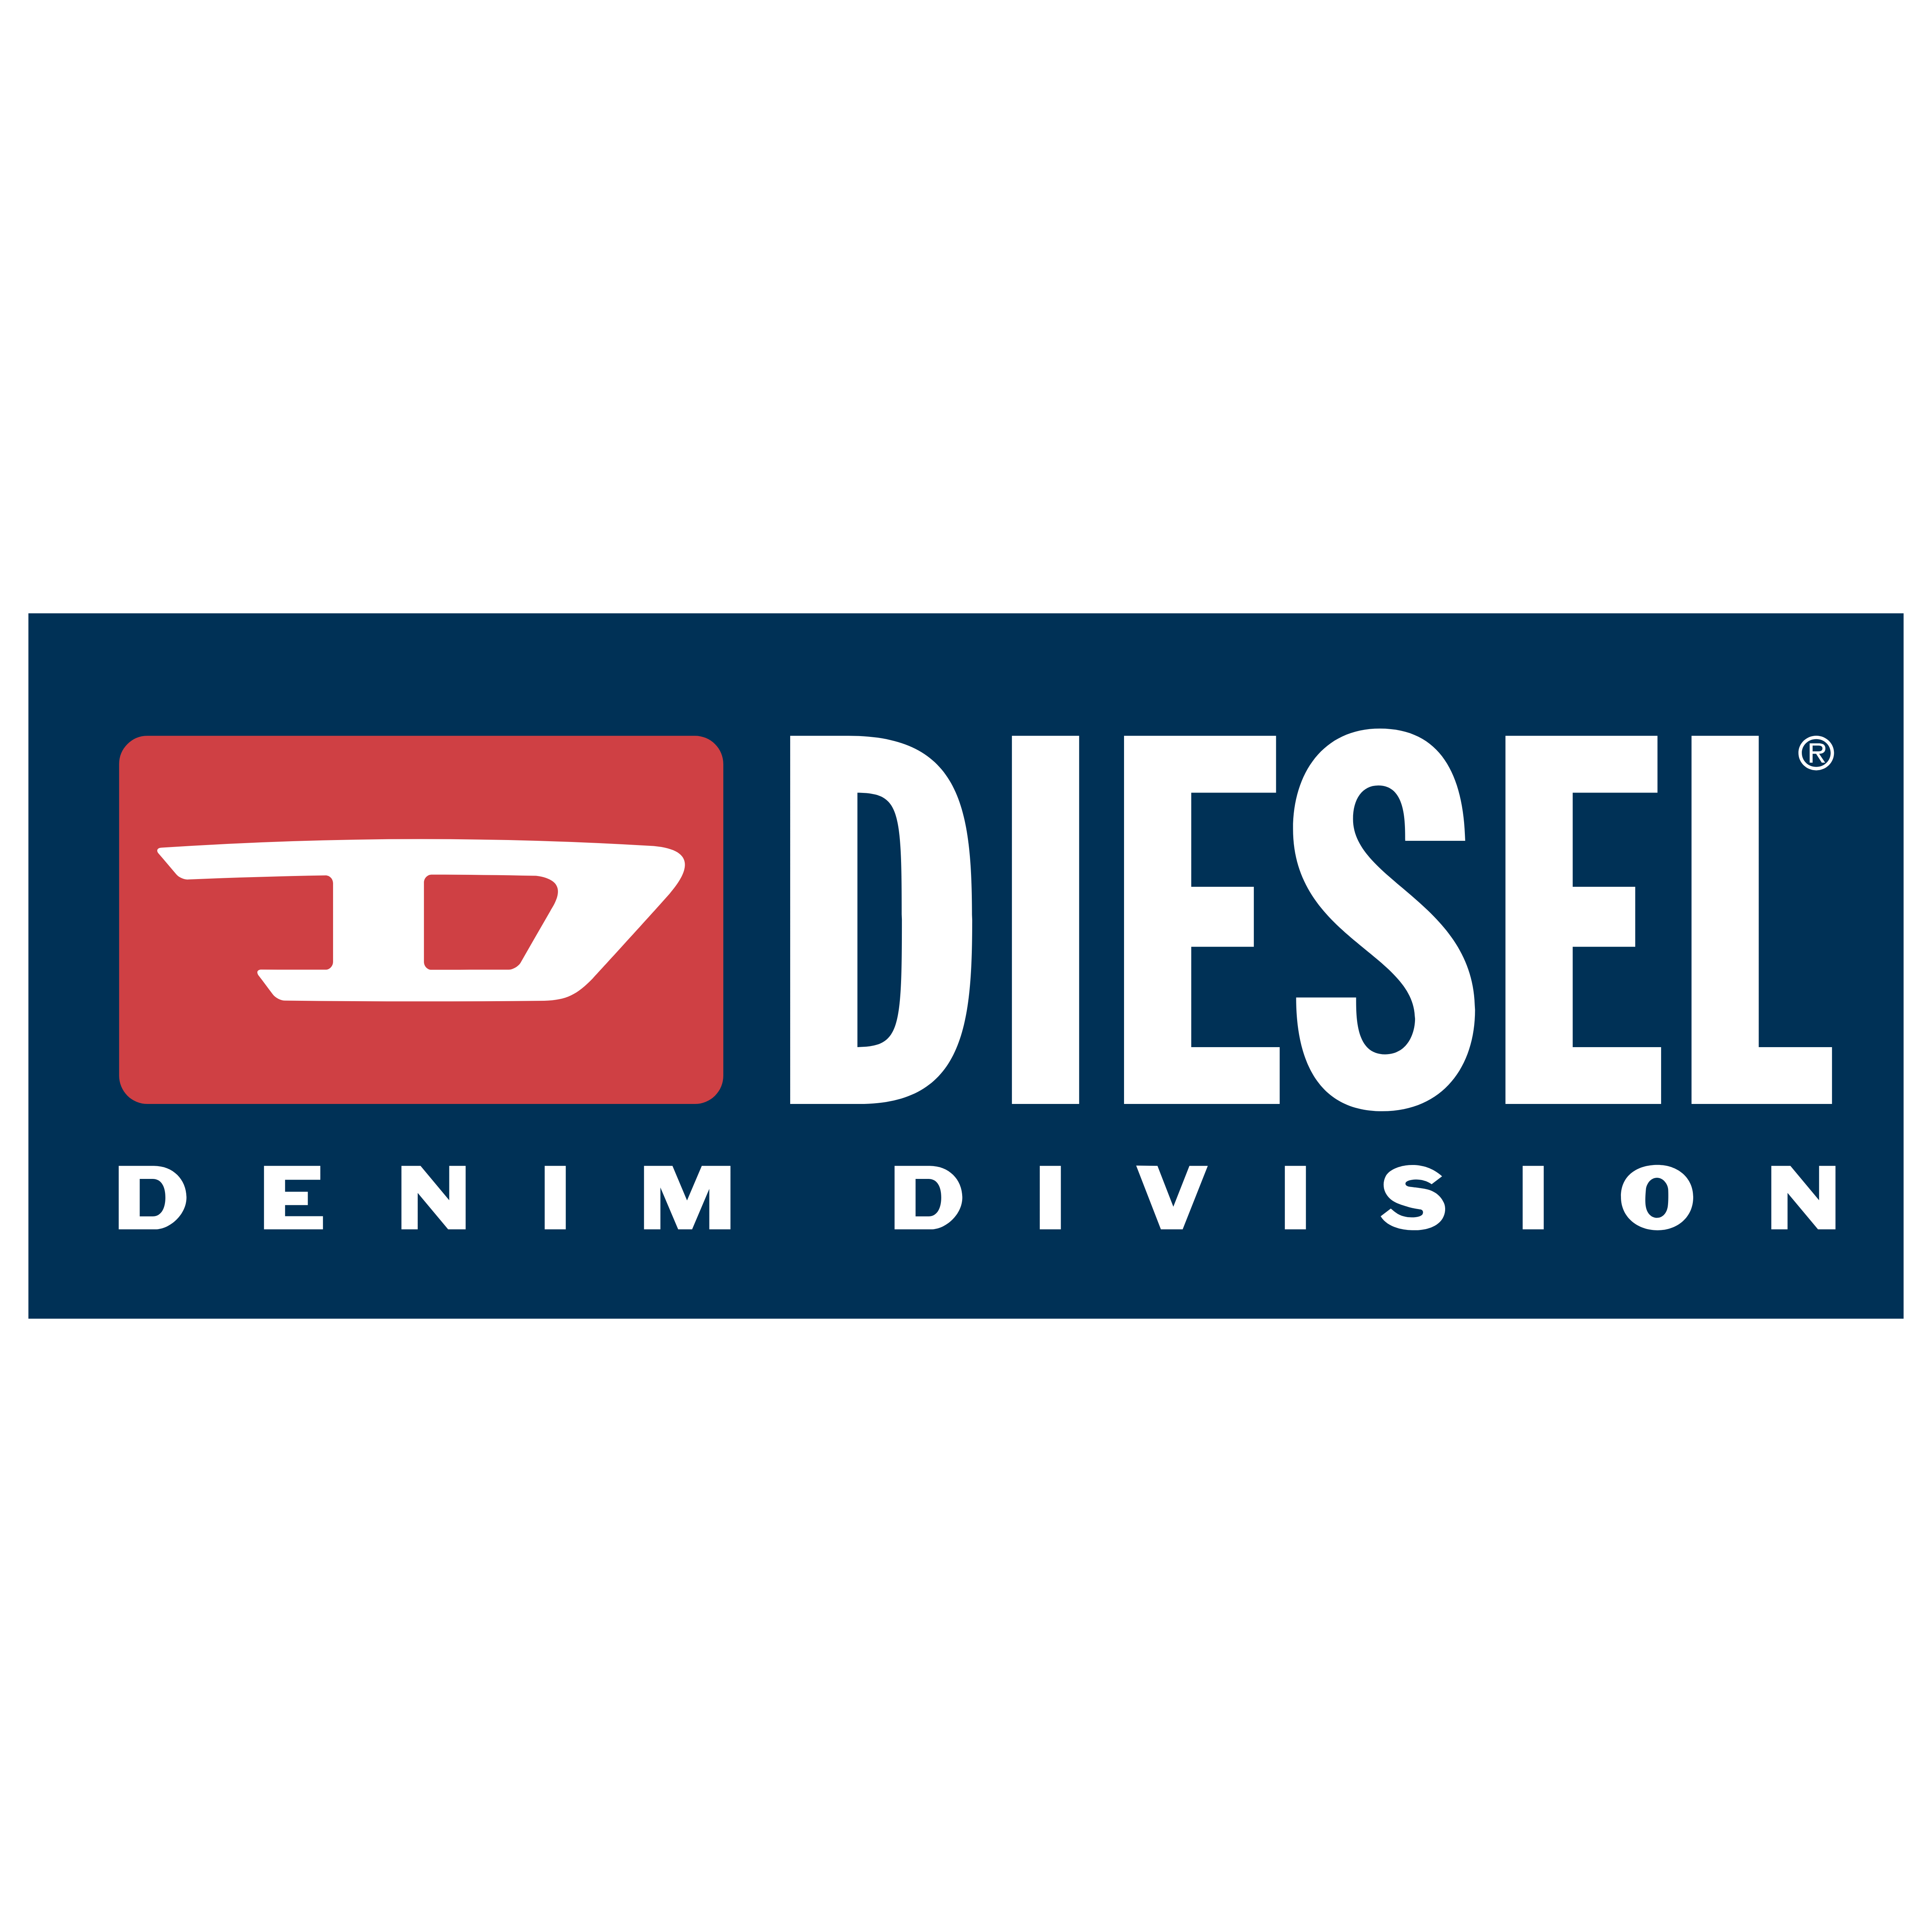 Diesel Business Brand Logo Lu